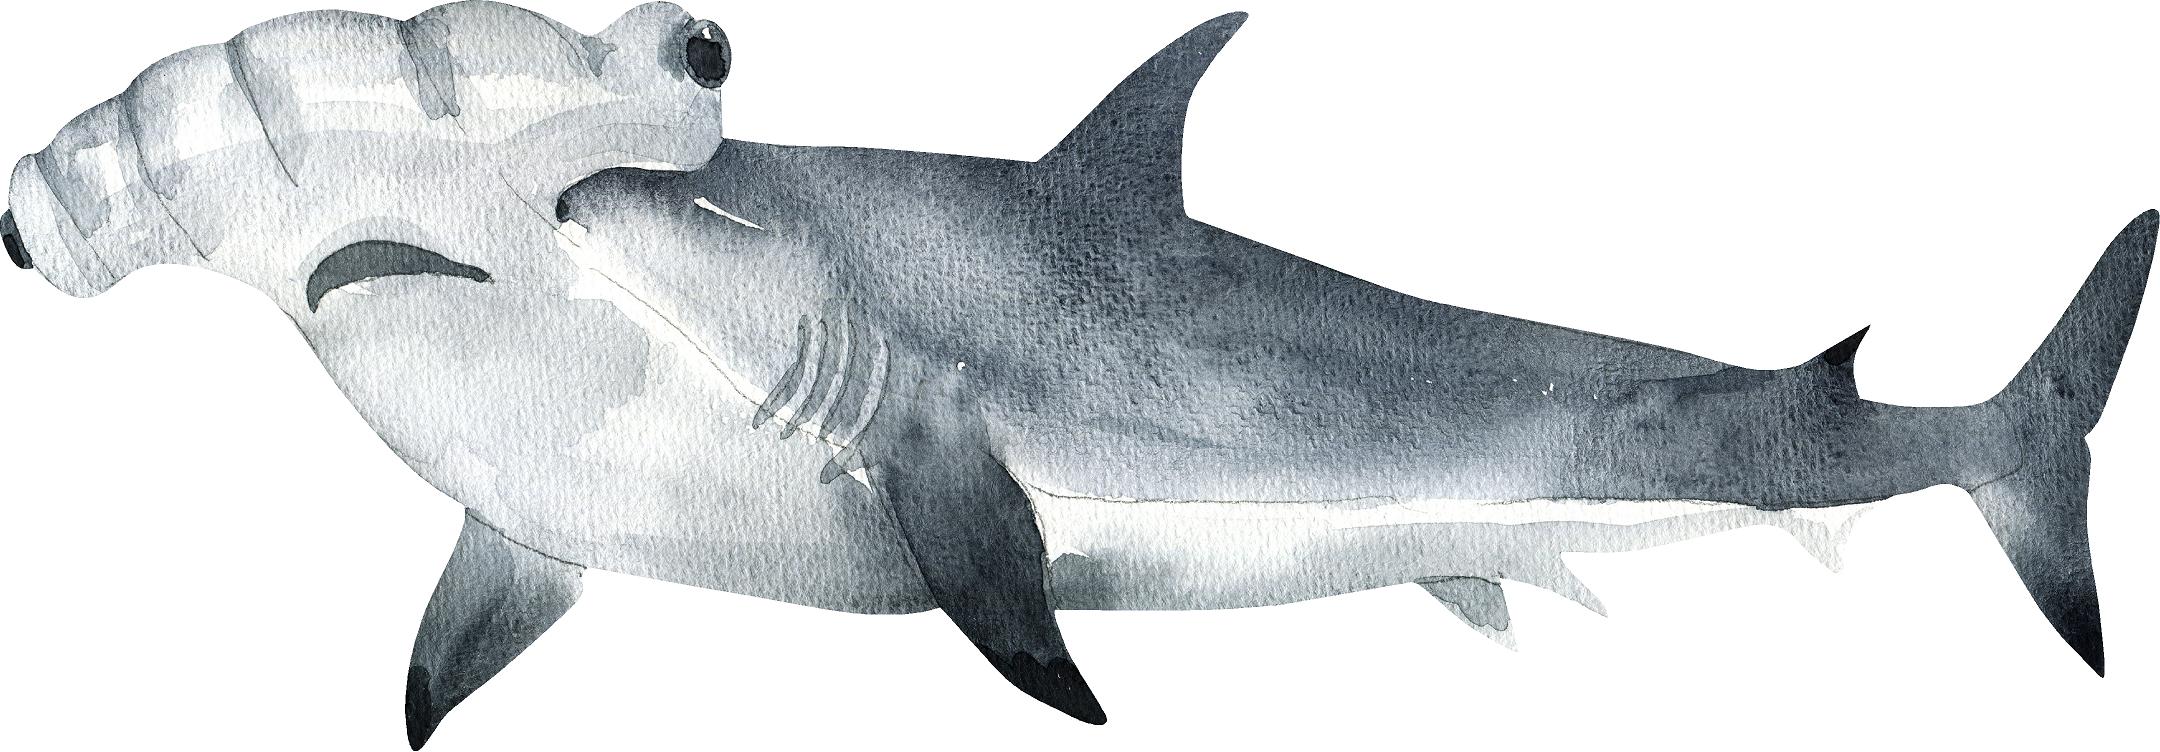 Watercolor Hammerhead Shark #2 Wall Decal Scalloped Shark Sea Animal Removable Fabric Vinyl Wall Sticker